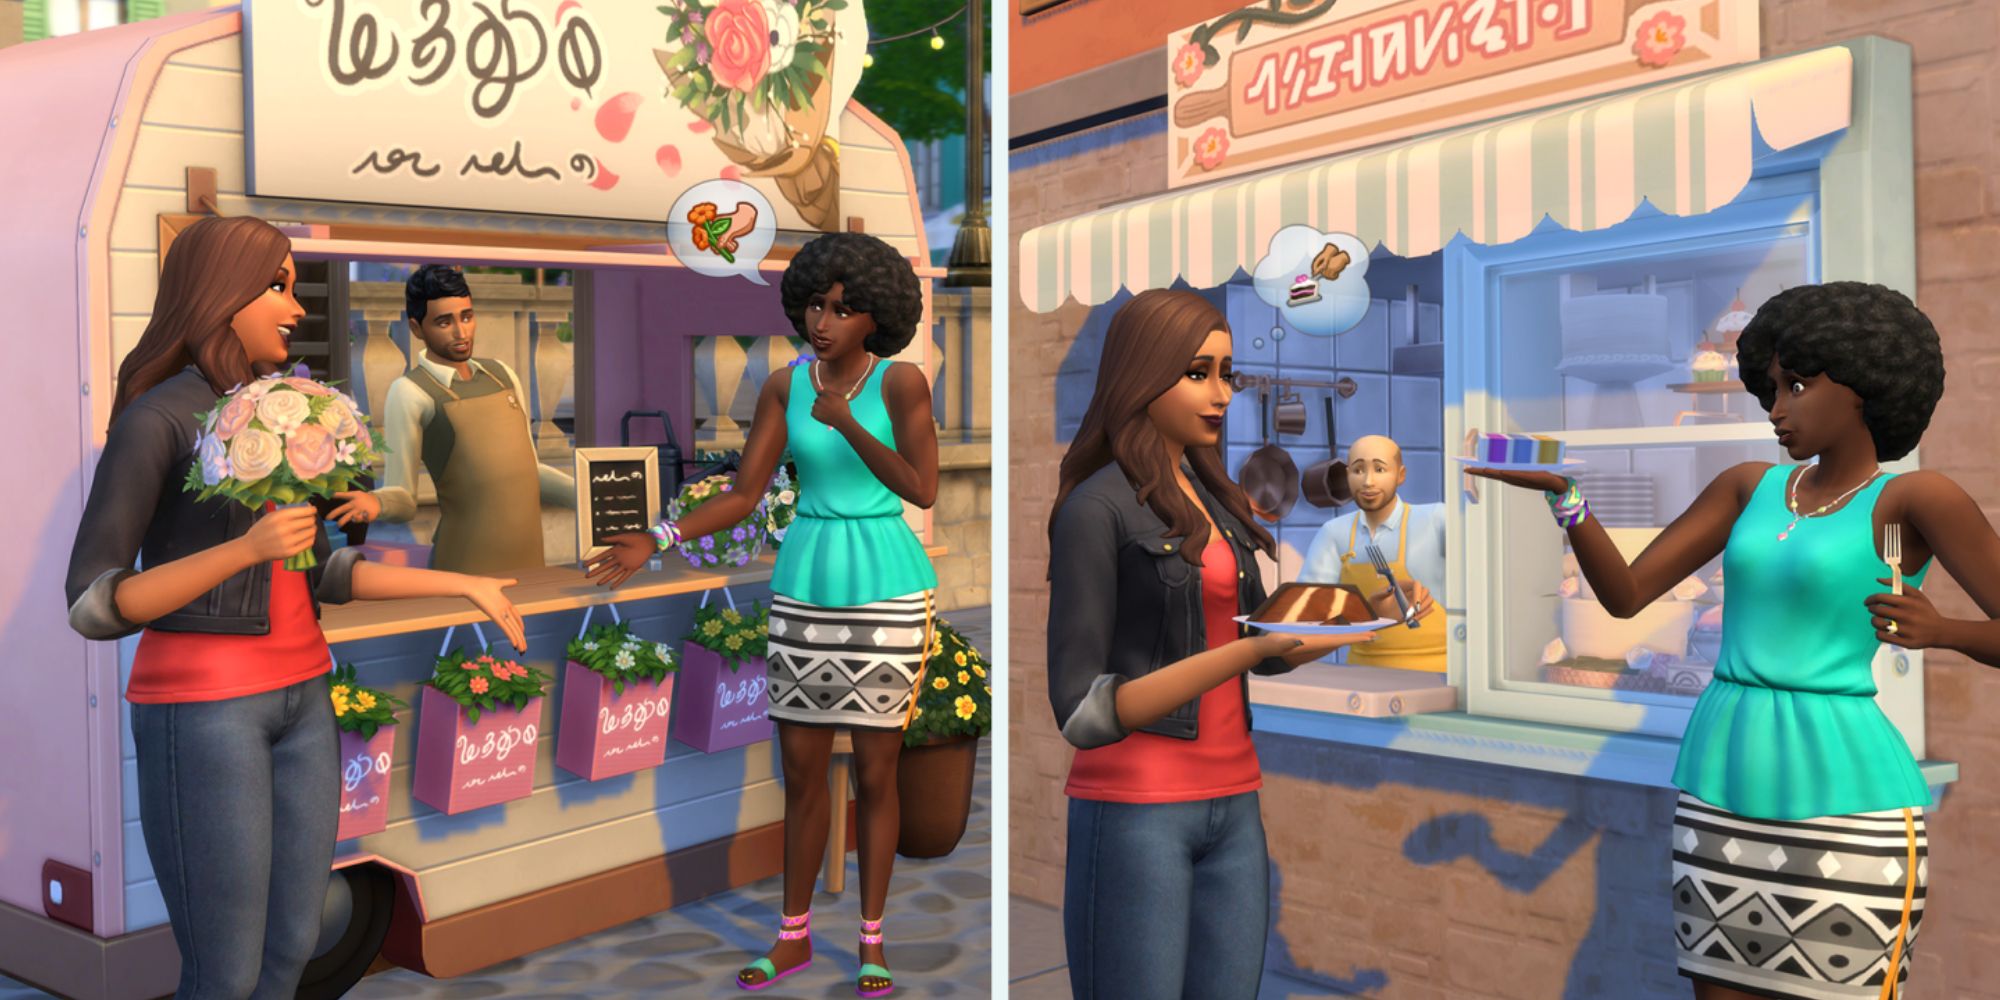 Sims 4 wedding stories choosing flowers and cake